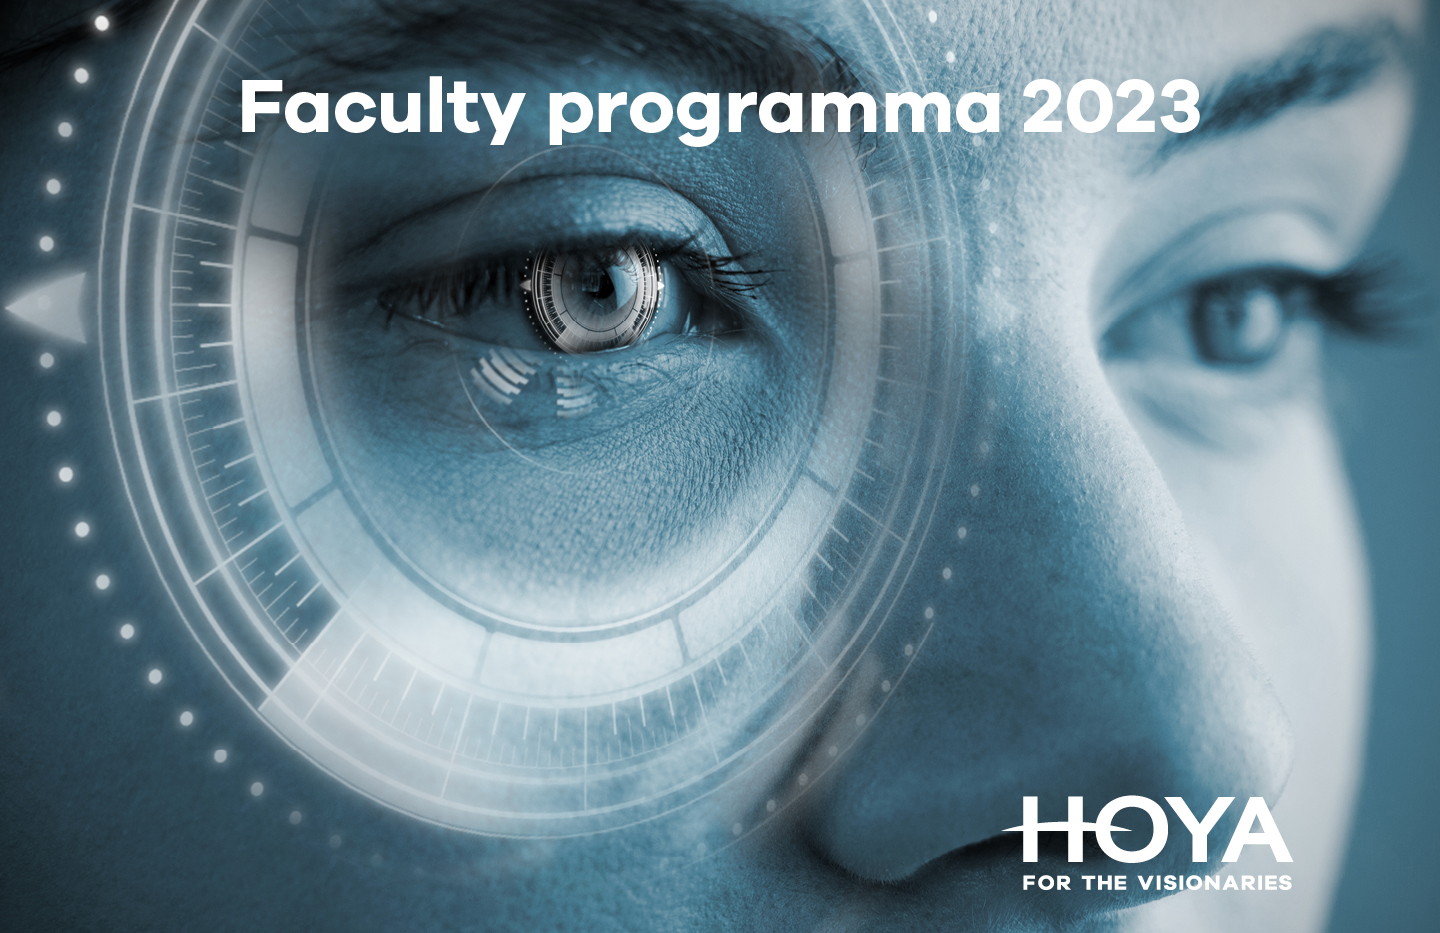 2022-658p HOYA Beeld Faculty programma 2023-A